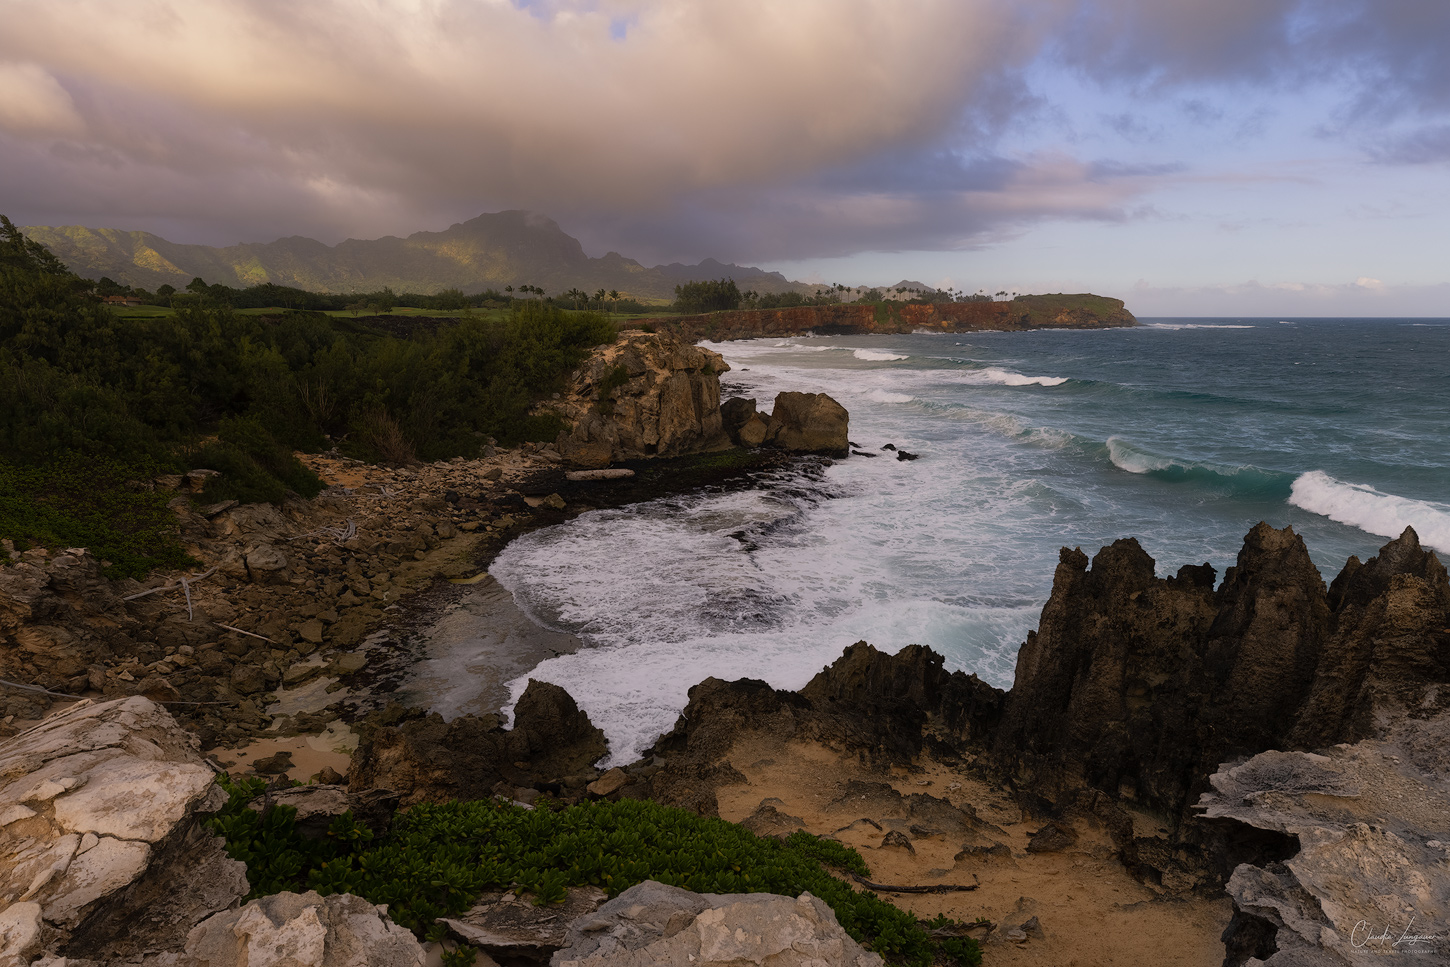 Overlook on the breaking waves and cliffs from Mahaulepu Heritage Trail near Shipwreck Beach on Kauai island in Hawaii.